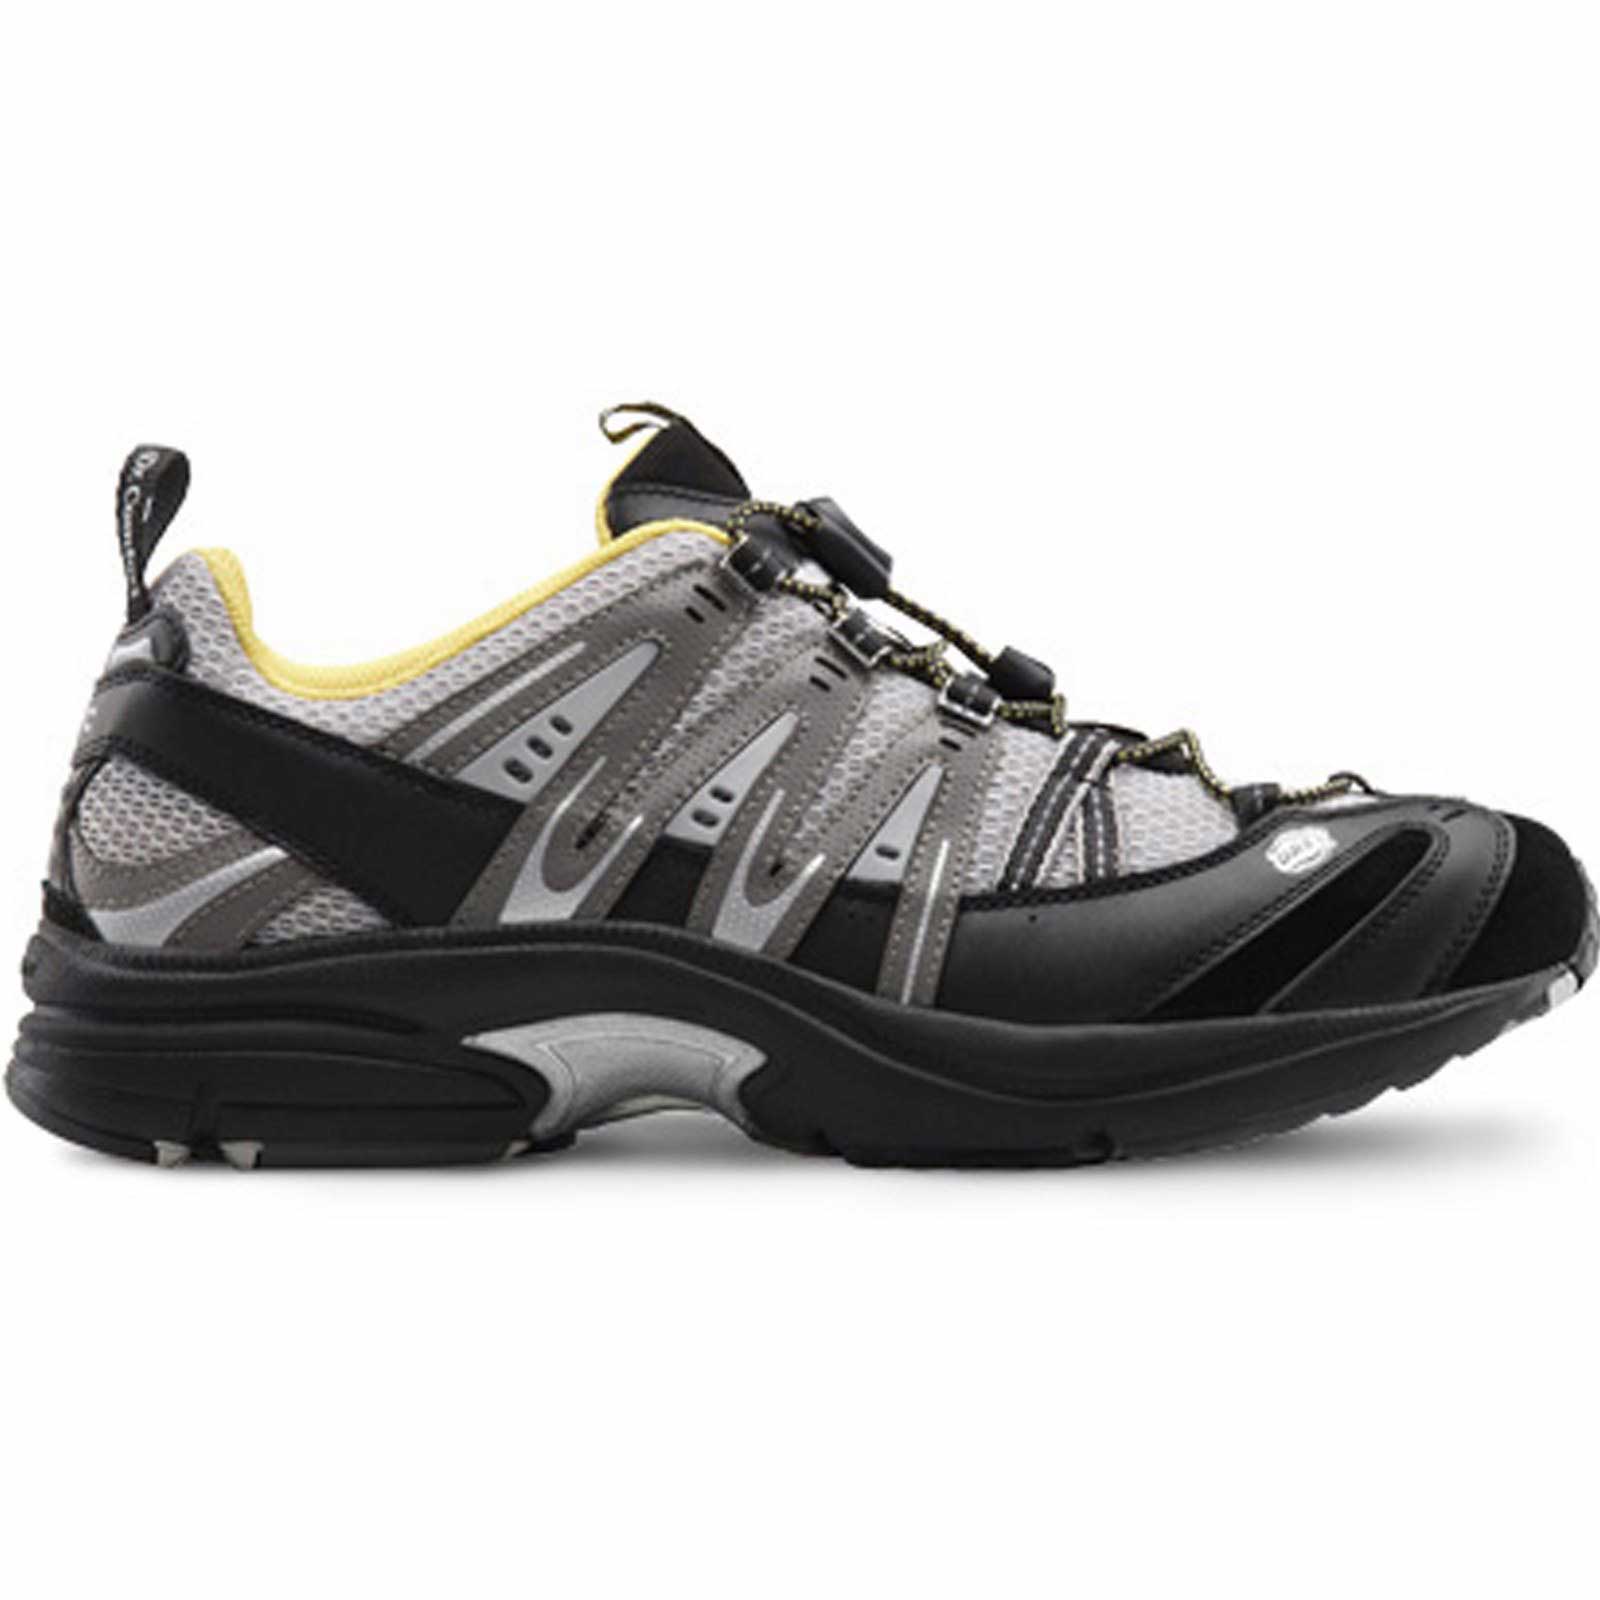 Dr. Comfort Performance Men's Athletic Shoe: 6 X-Wide (3E/4E) Metallic/Blue Elastic & Standard Laces - image 5 of 5